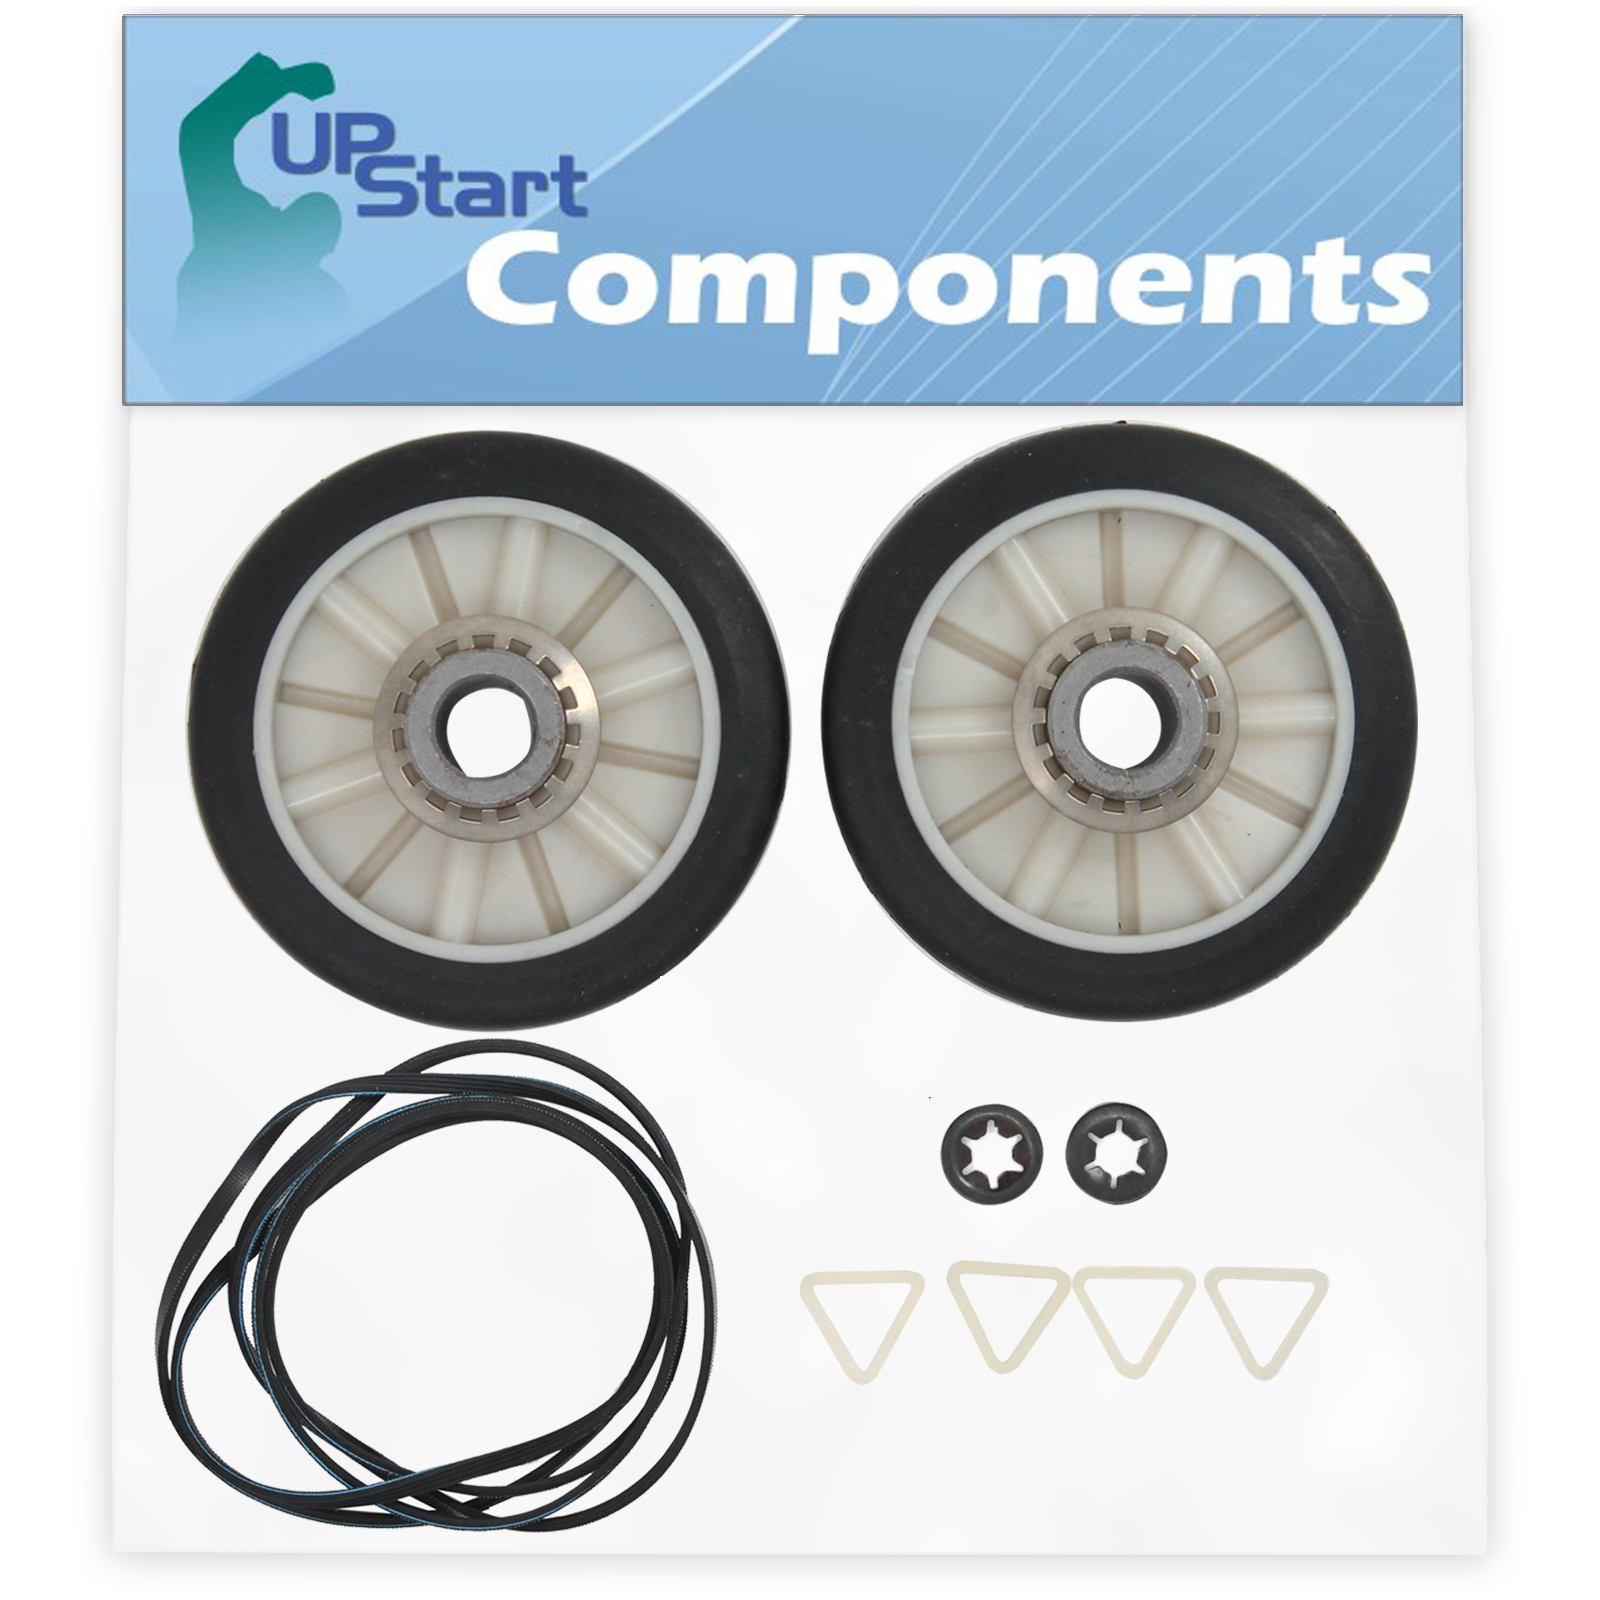 UpStart Components 2 Pieces 349241T Dryer Drum Roller & 341241 Drum Belt Replacement for Kenmore / Sears 11070812990 Dryer